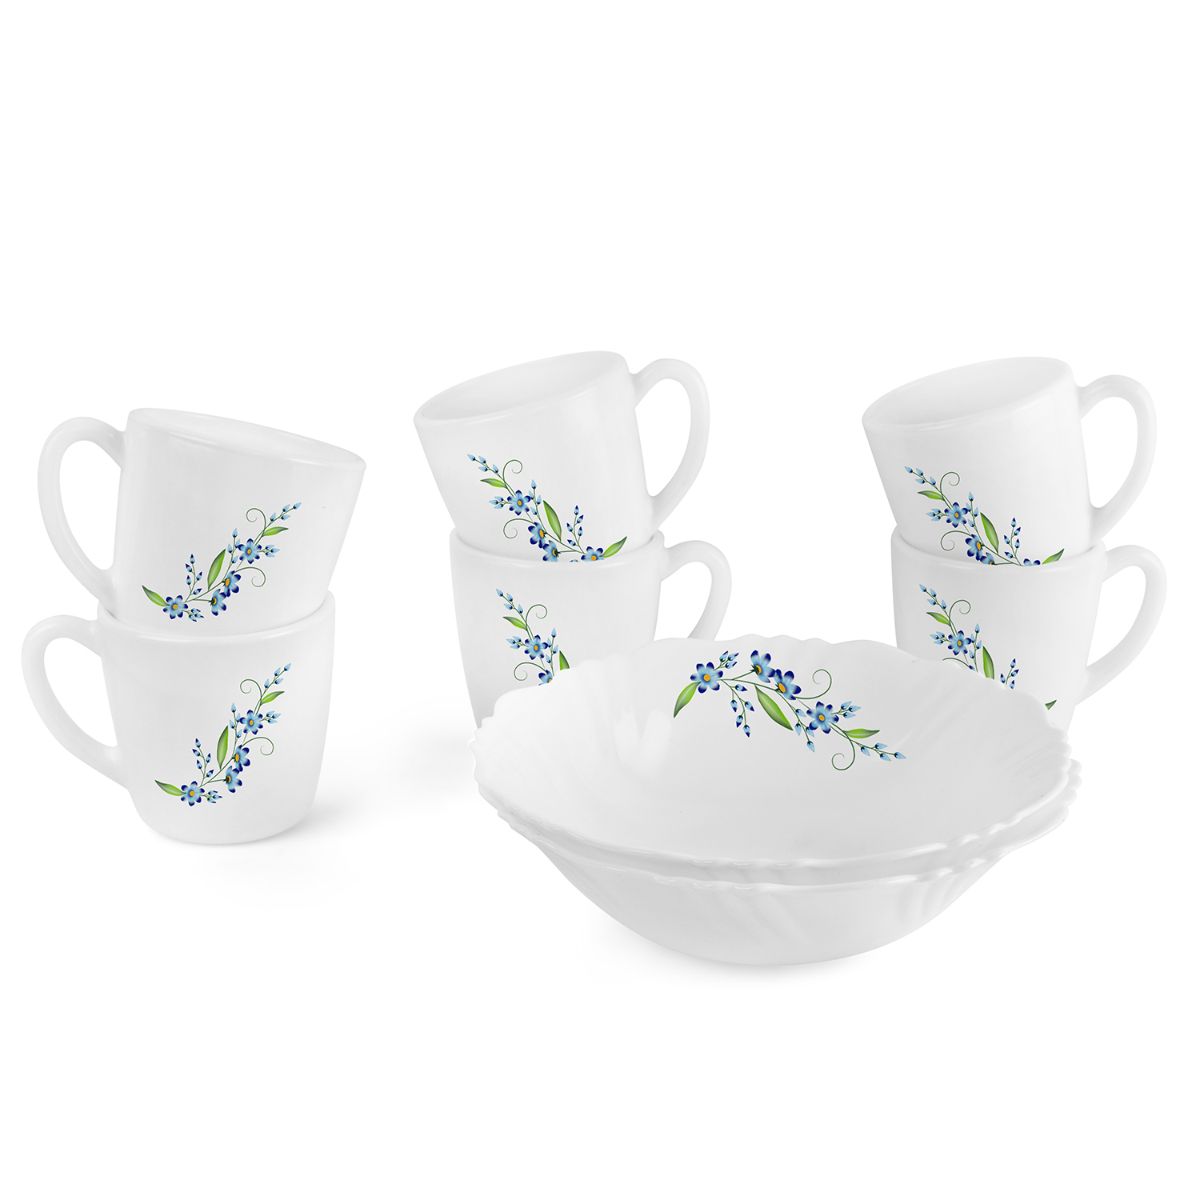 Imperial Series Quick Bite Bowl & Mug Gift set, 8 Pieces Blue Creeper / 8 Pieces